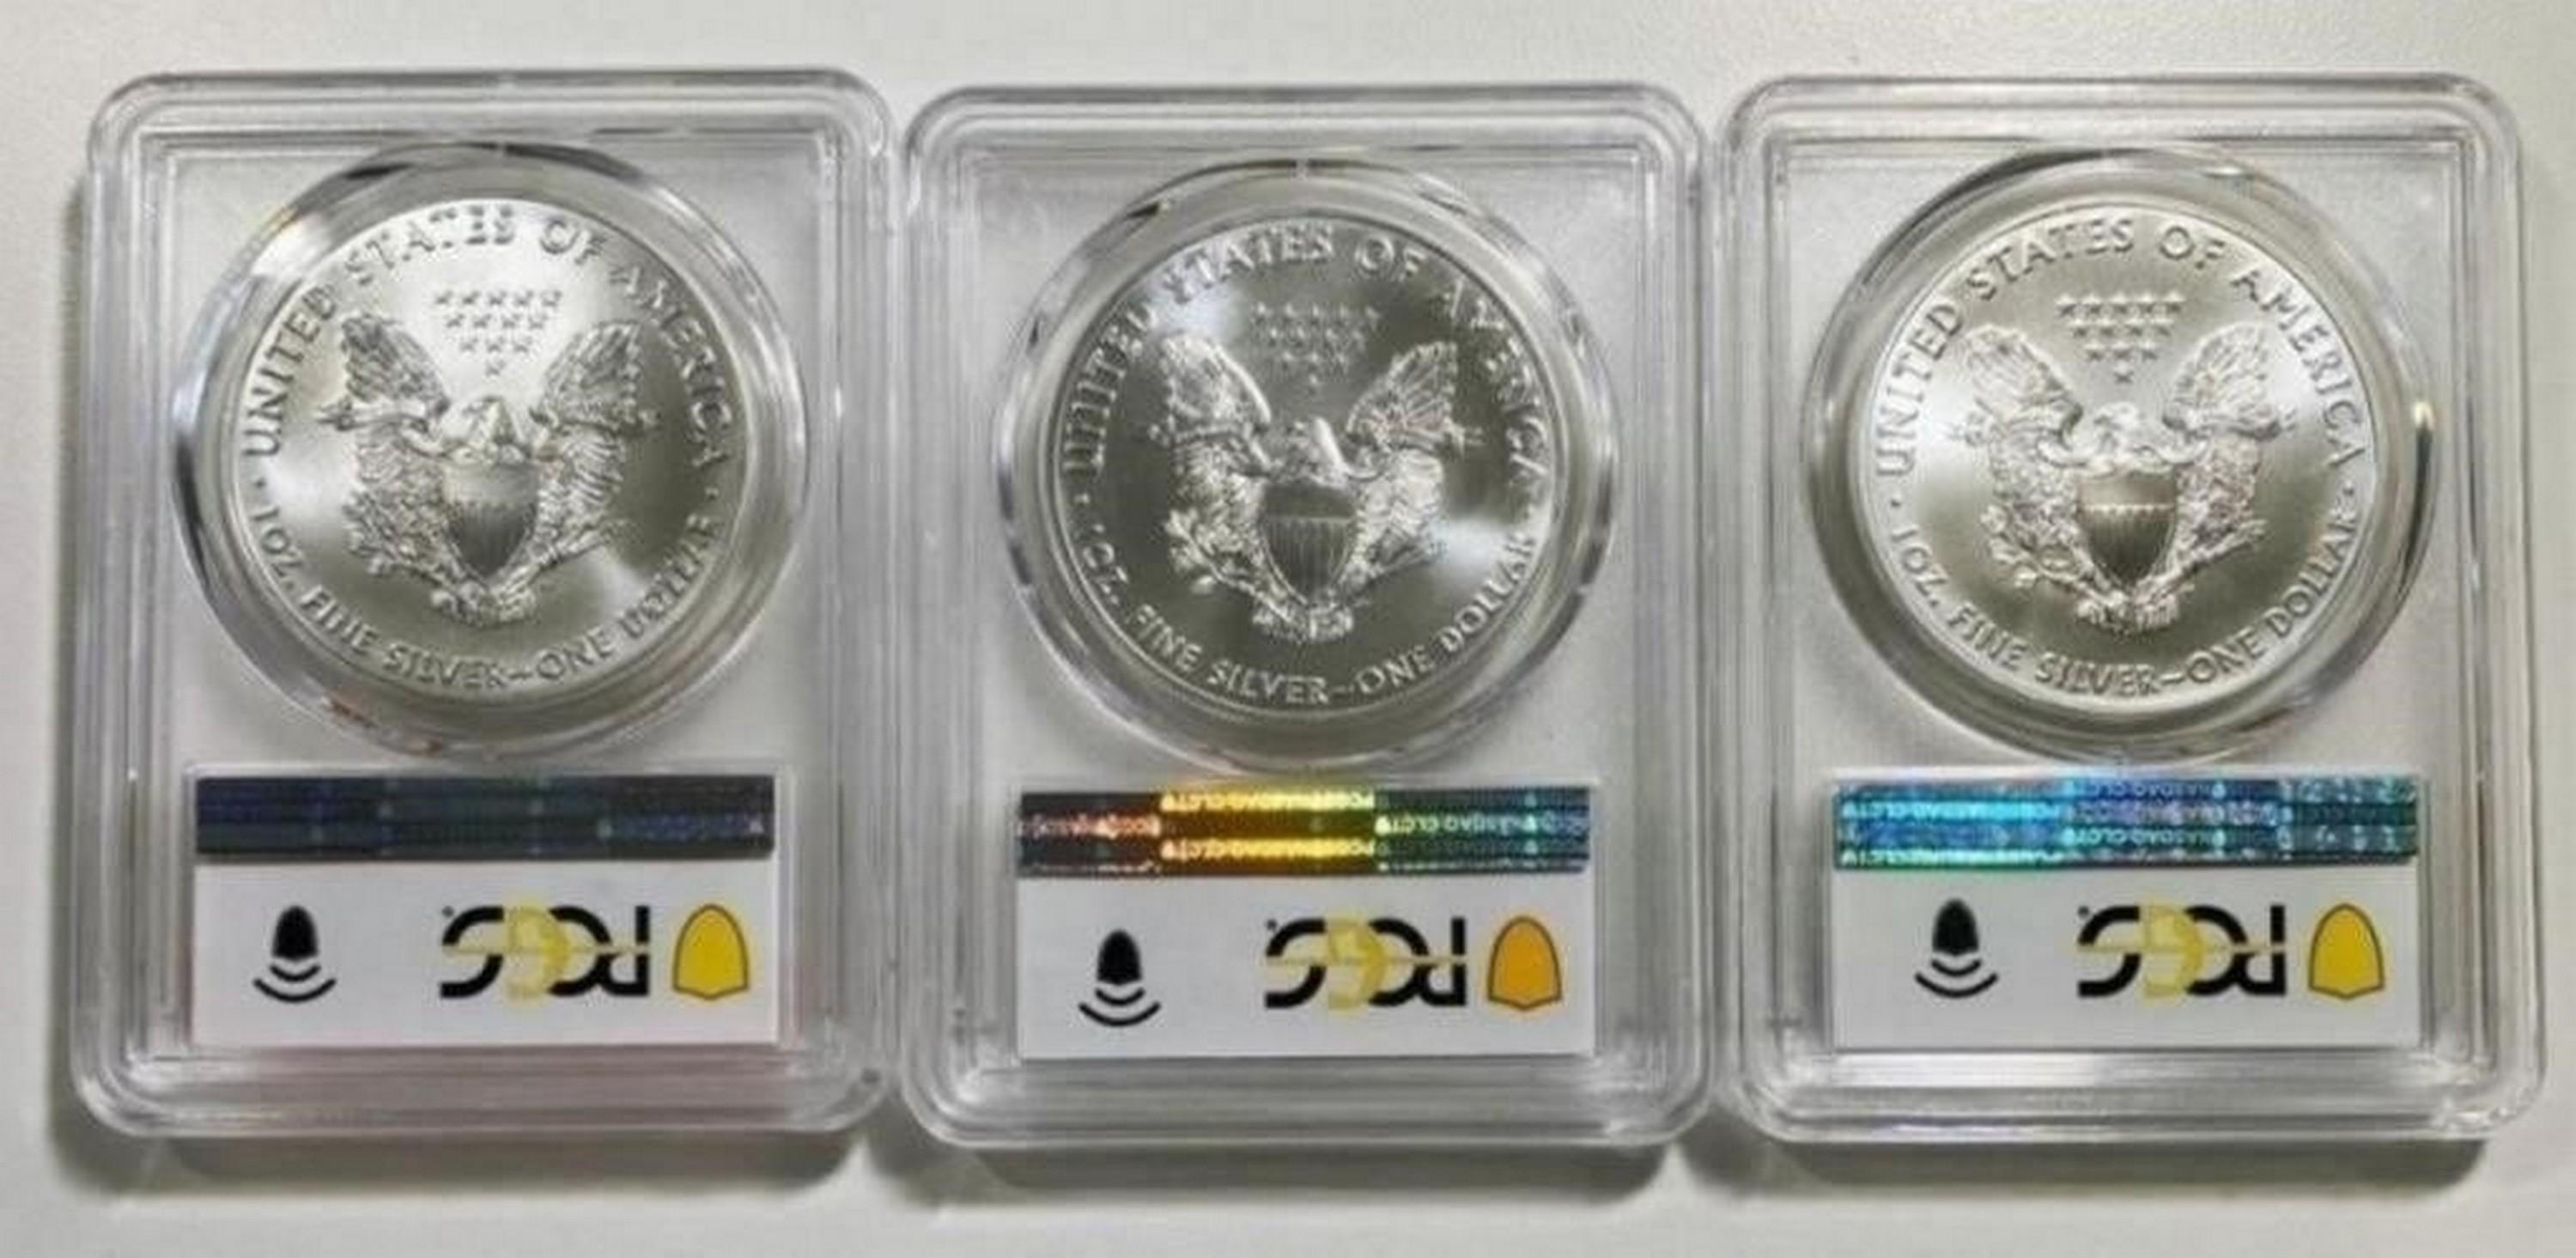 2020-P/S/W 3 Coin American Silver Eagle Set PCGS